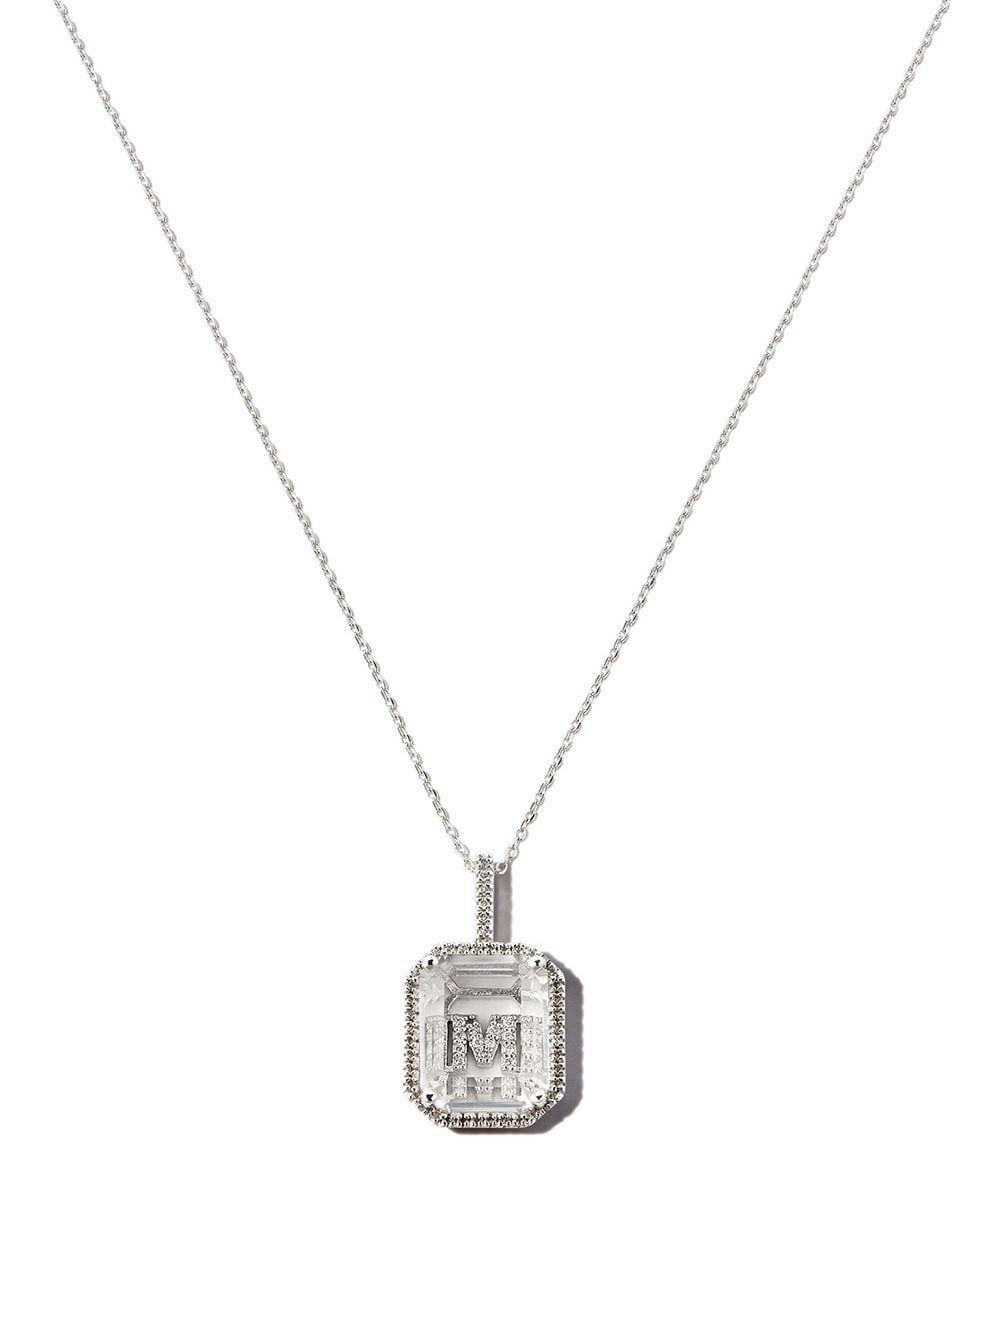 14kt white gold M Initial diamond frame pendant necklace